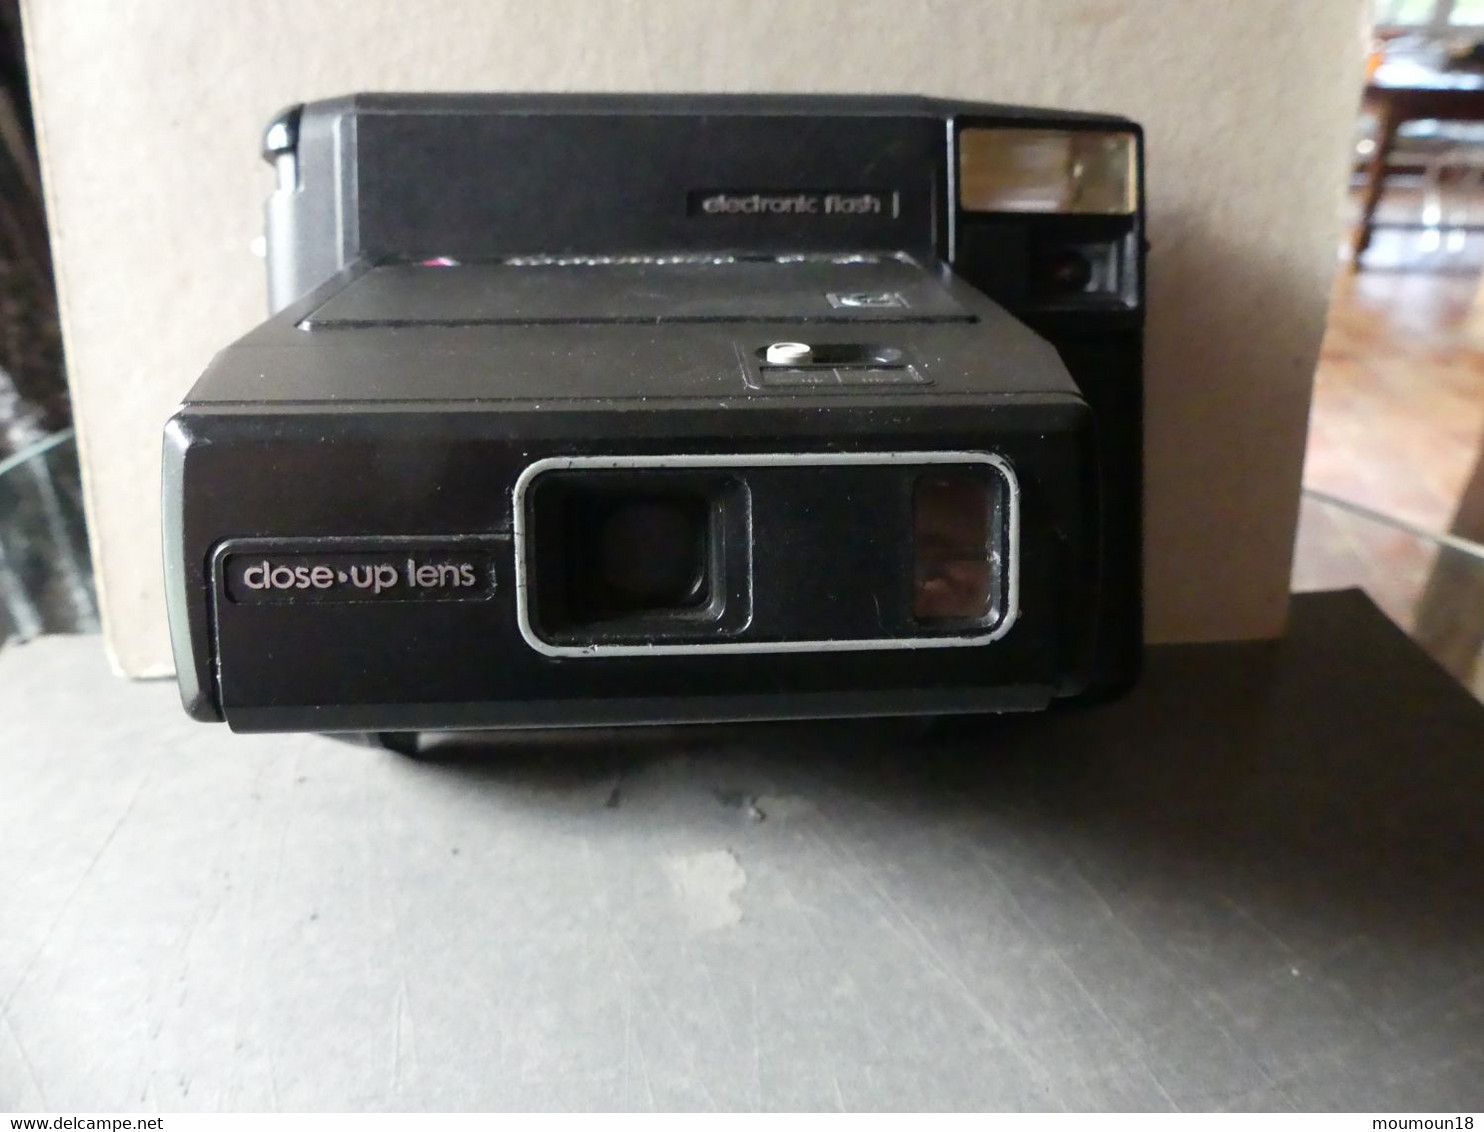 Kodamatic 970 L - Cameras